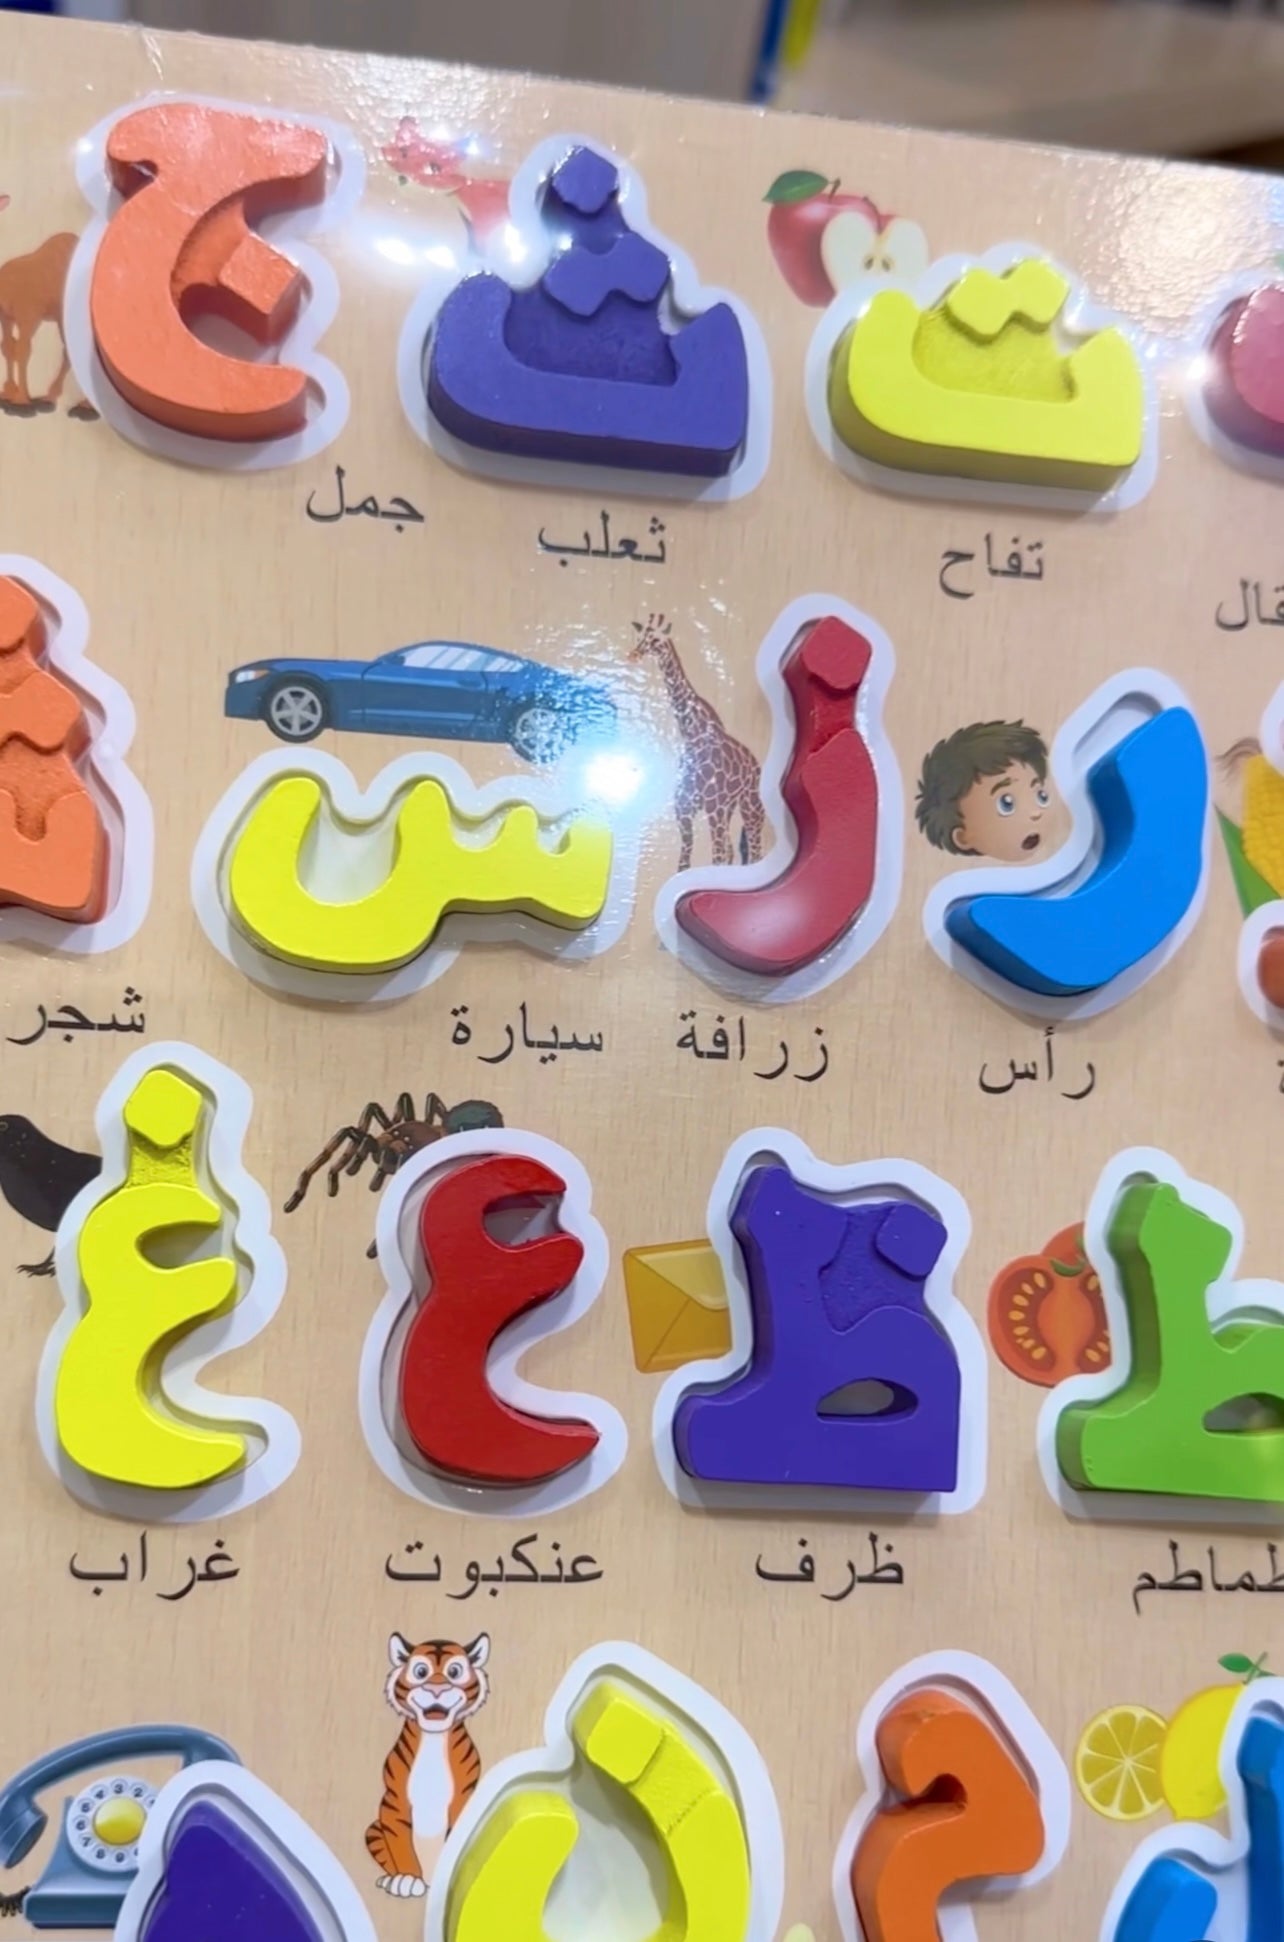 3D Arabic Alphabet with Whiteboard